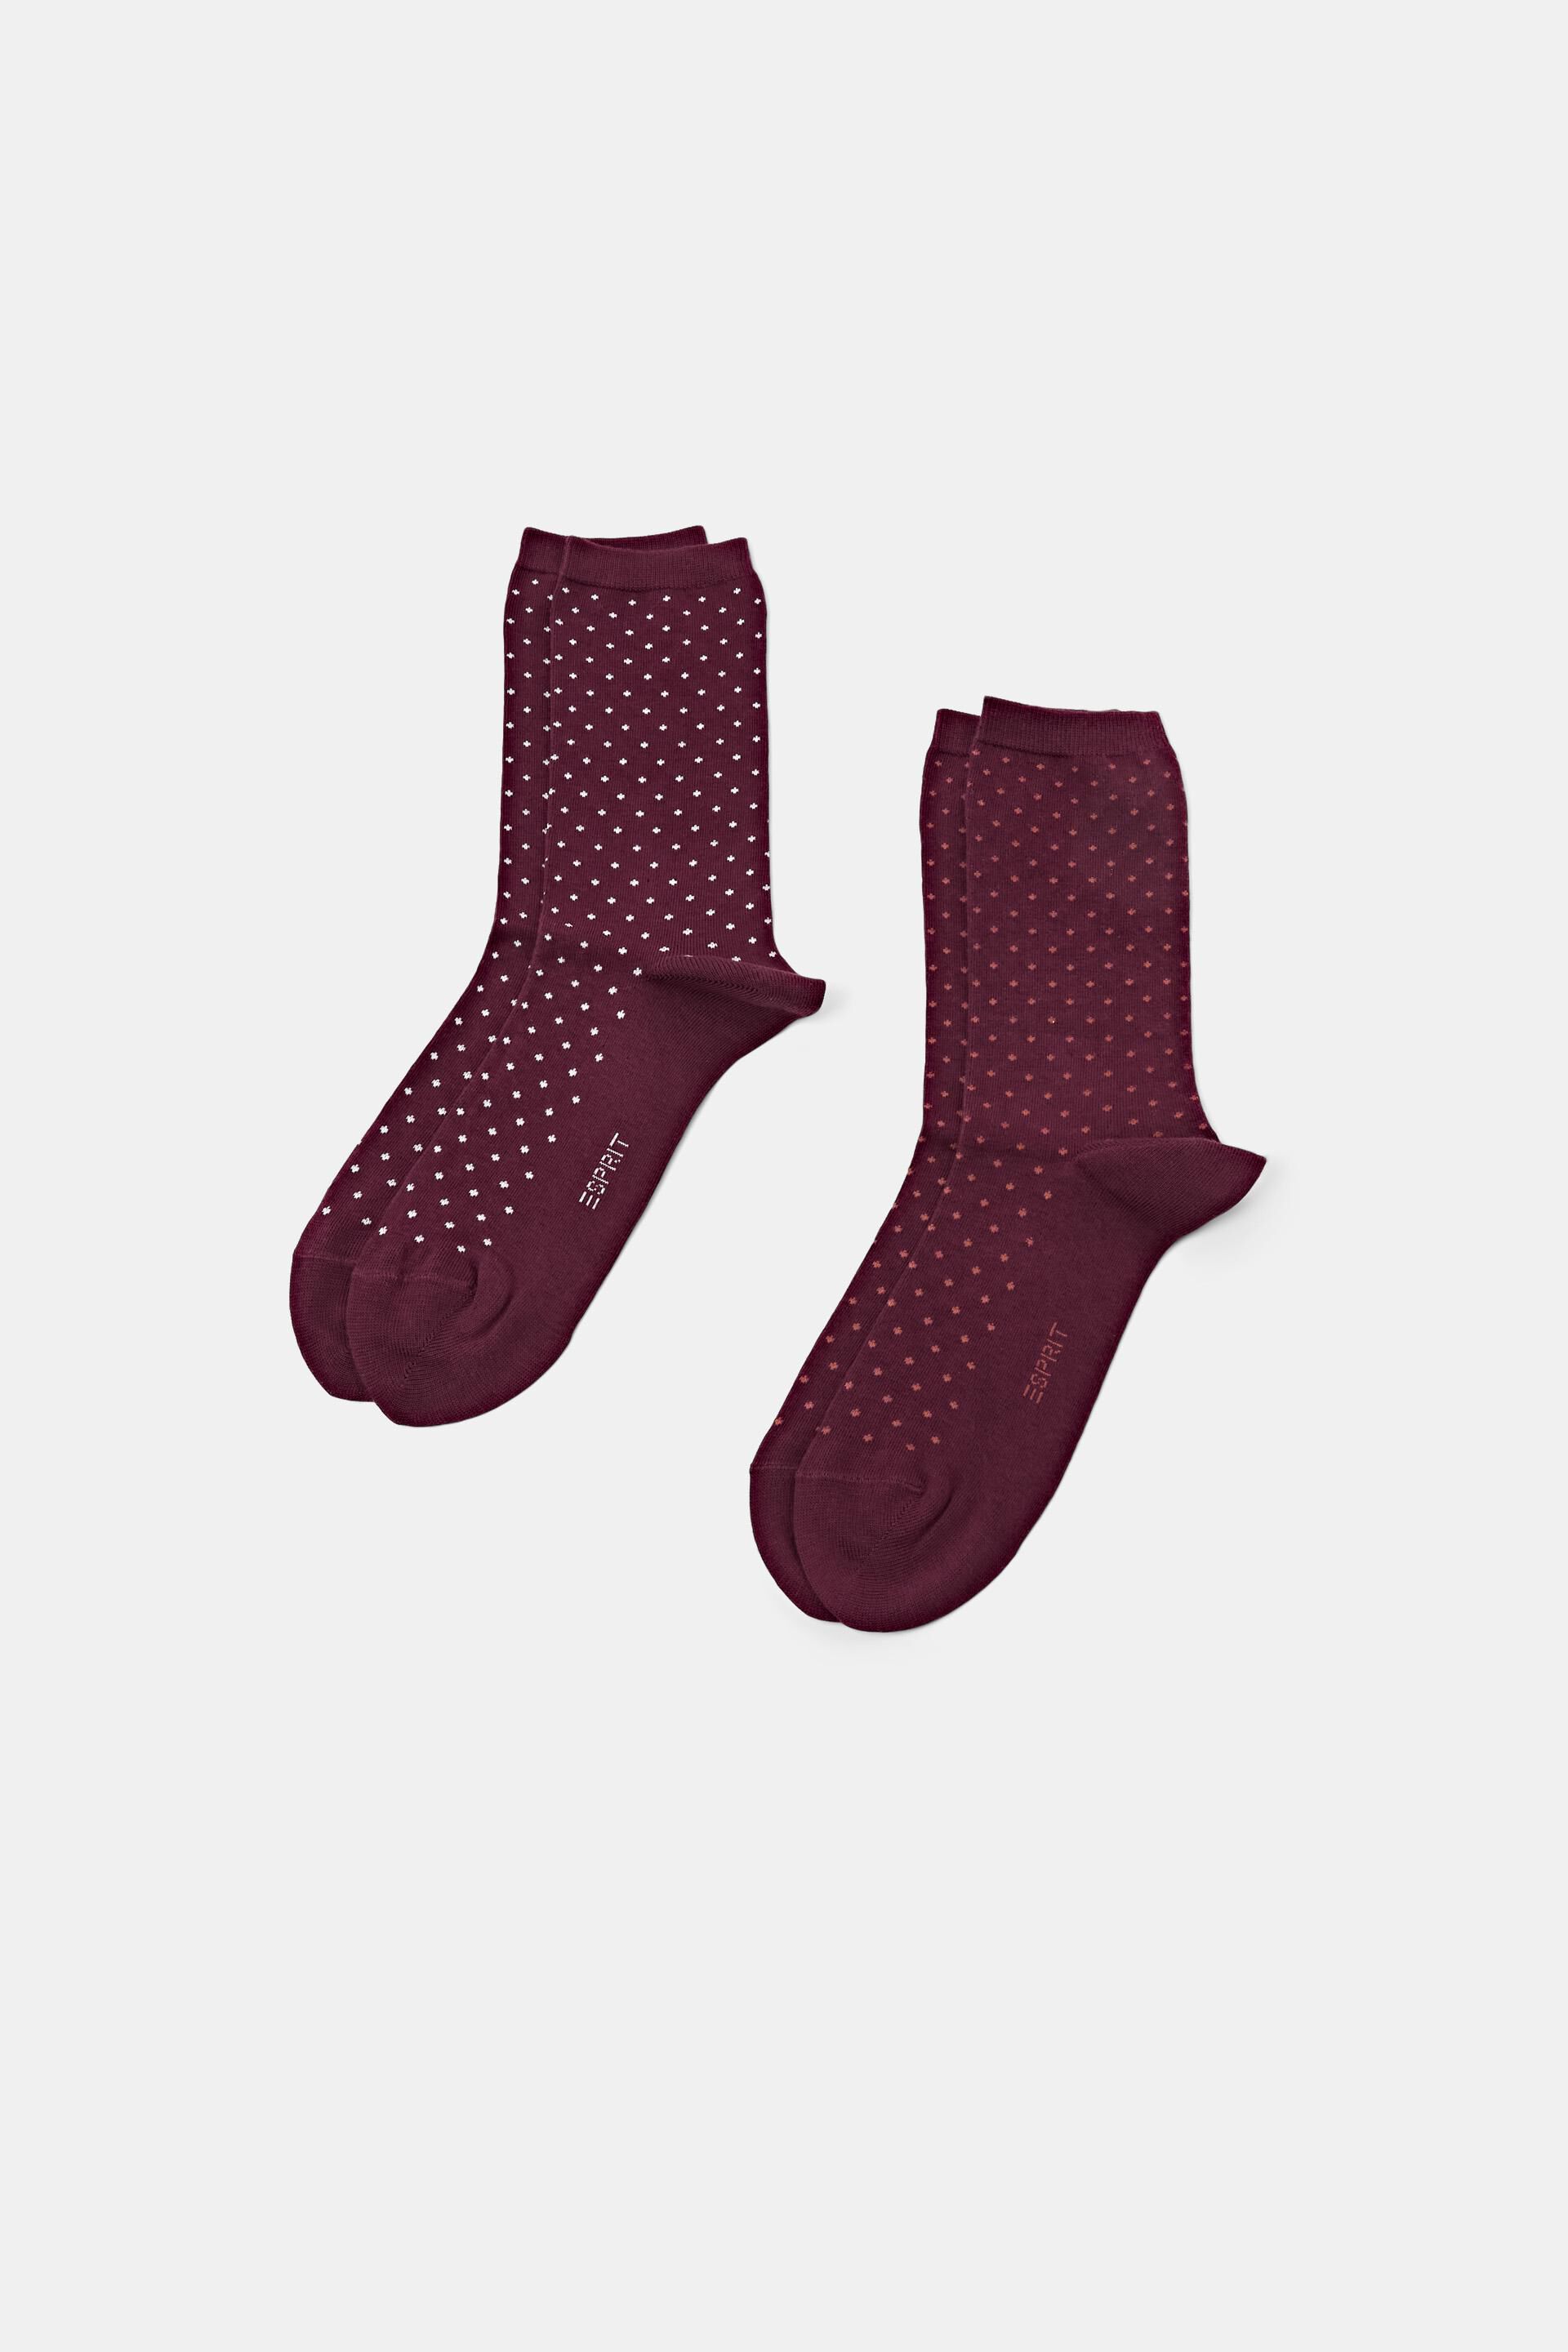 Esprit Online Store 2-pack of polka dot socks, cotton organic